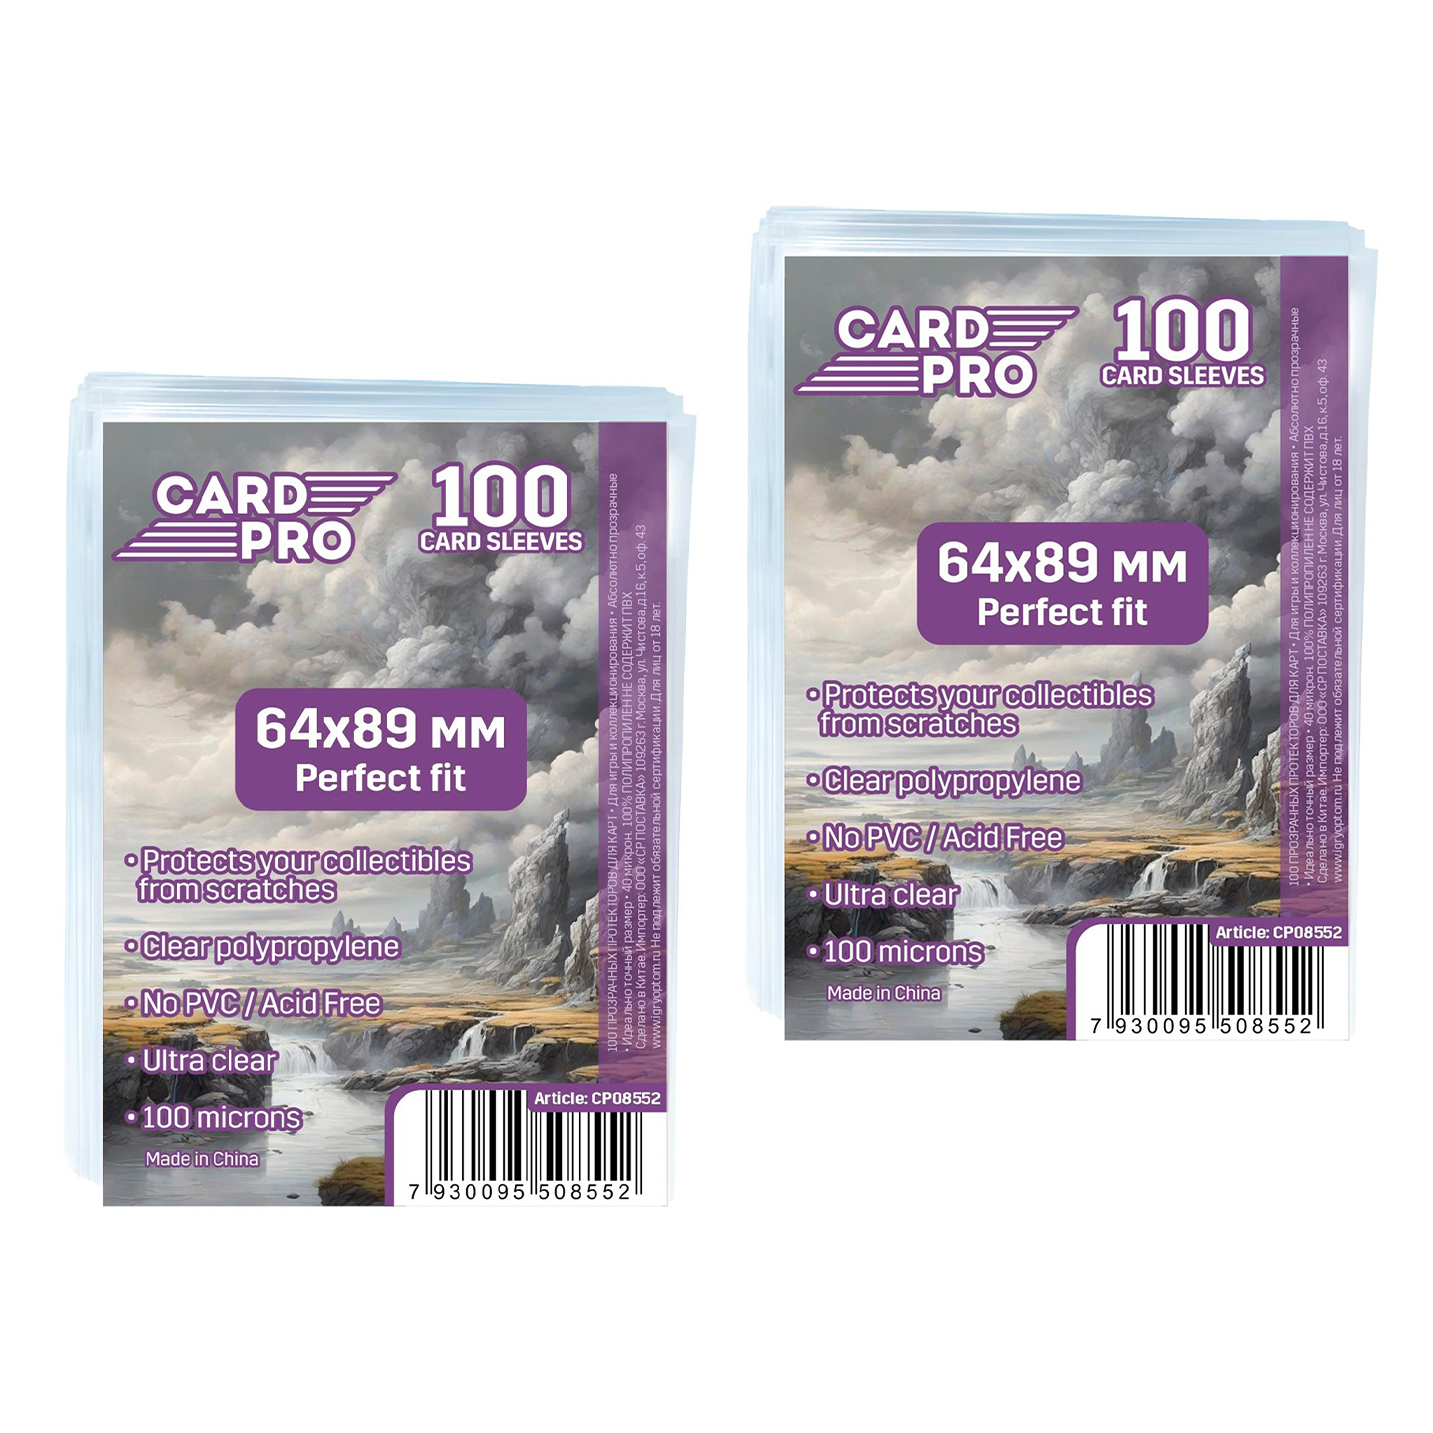 Прозрачные протекторы Card-Pro Perfect Fit 64x89 мм, 2 пачки по 100 шт, для ККИ протекторы card pro premium perfect fit 64x89 мм 2 пачки по 50 шт для карт mtg pokemon